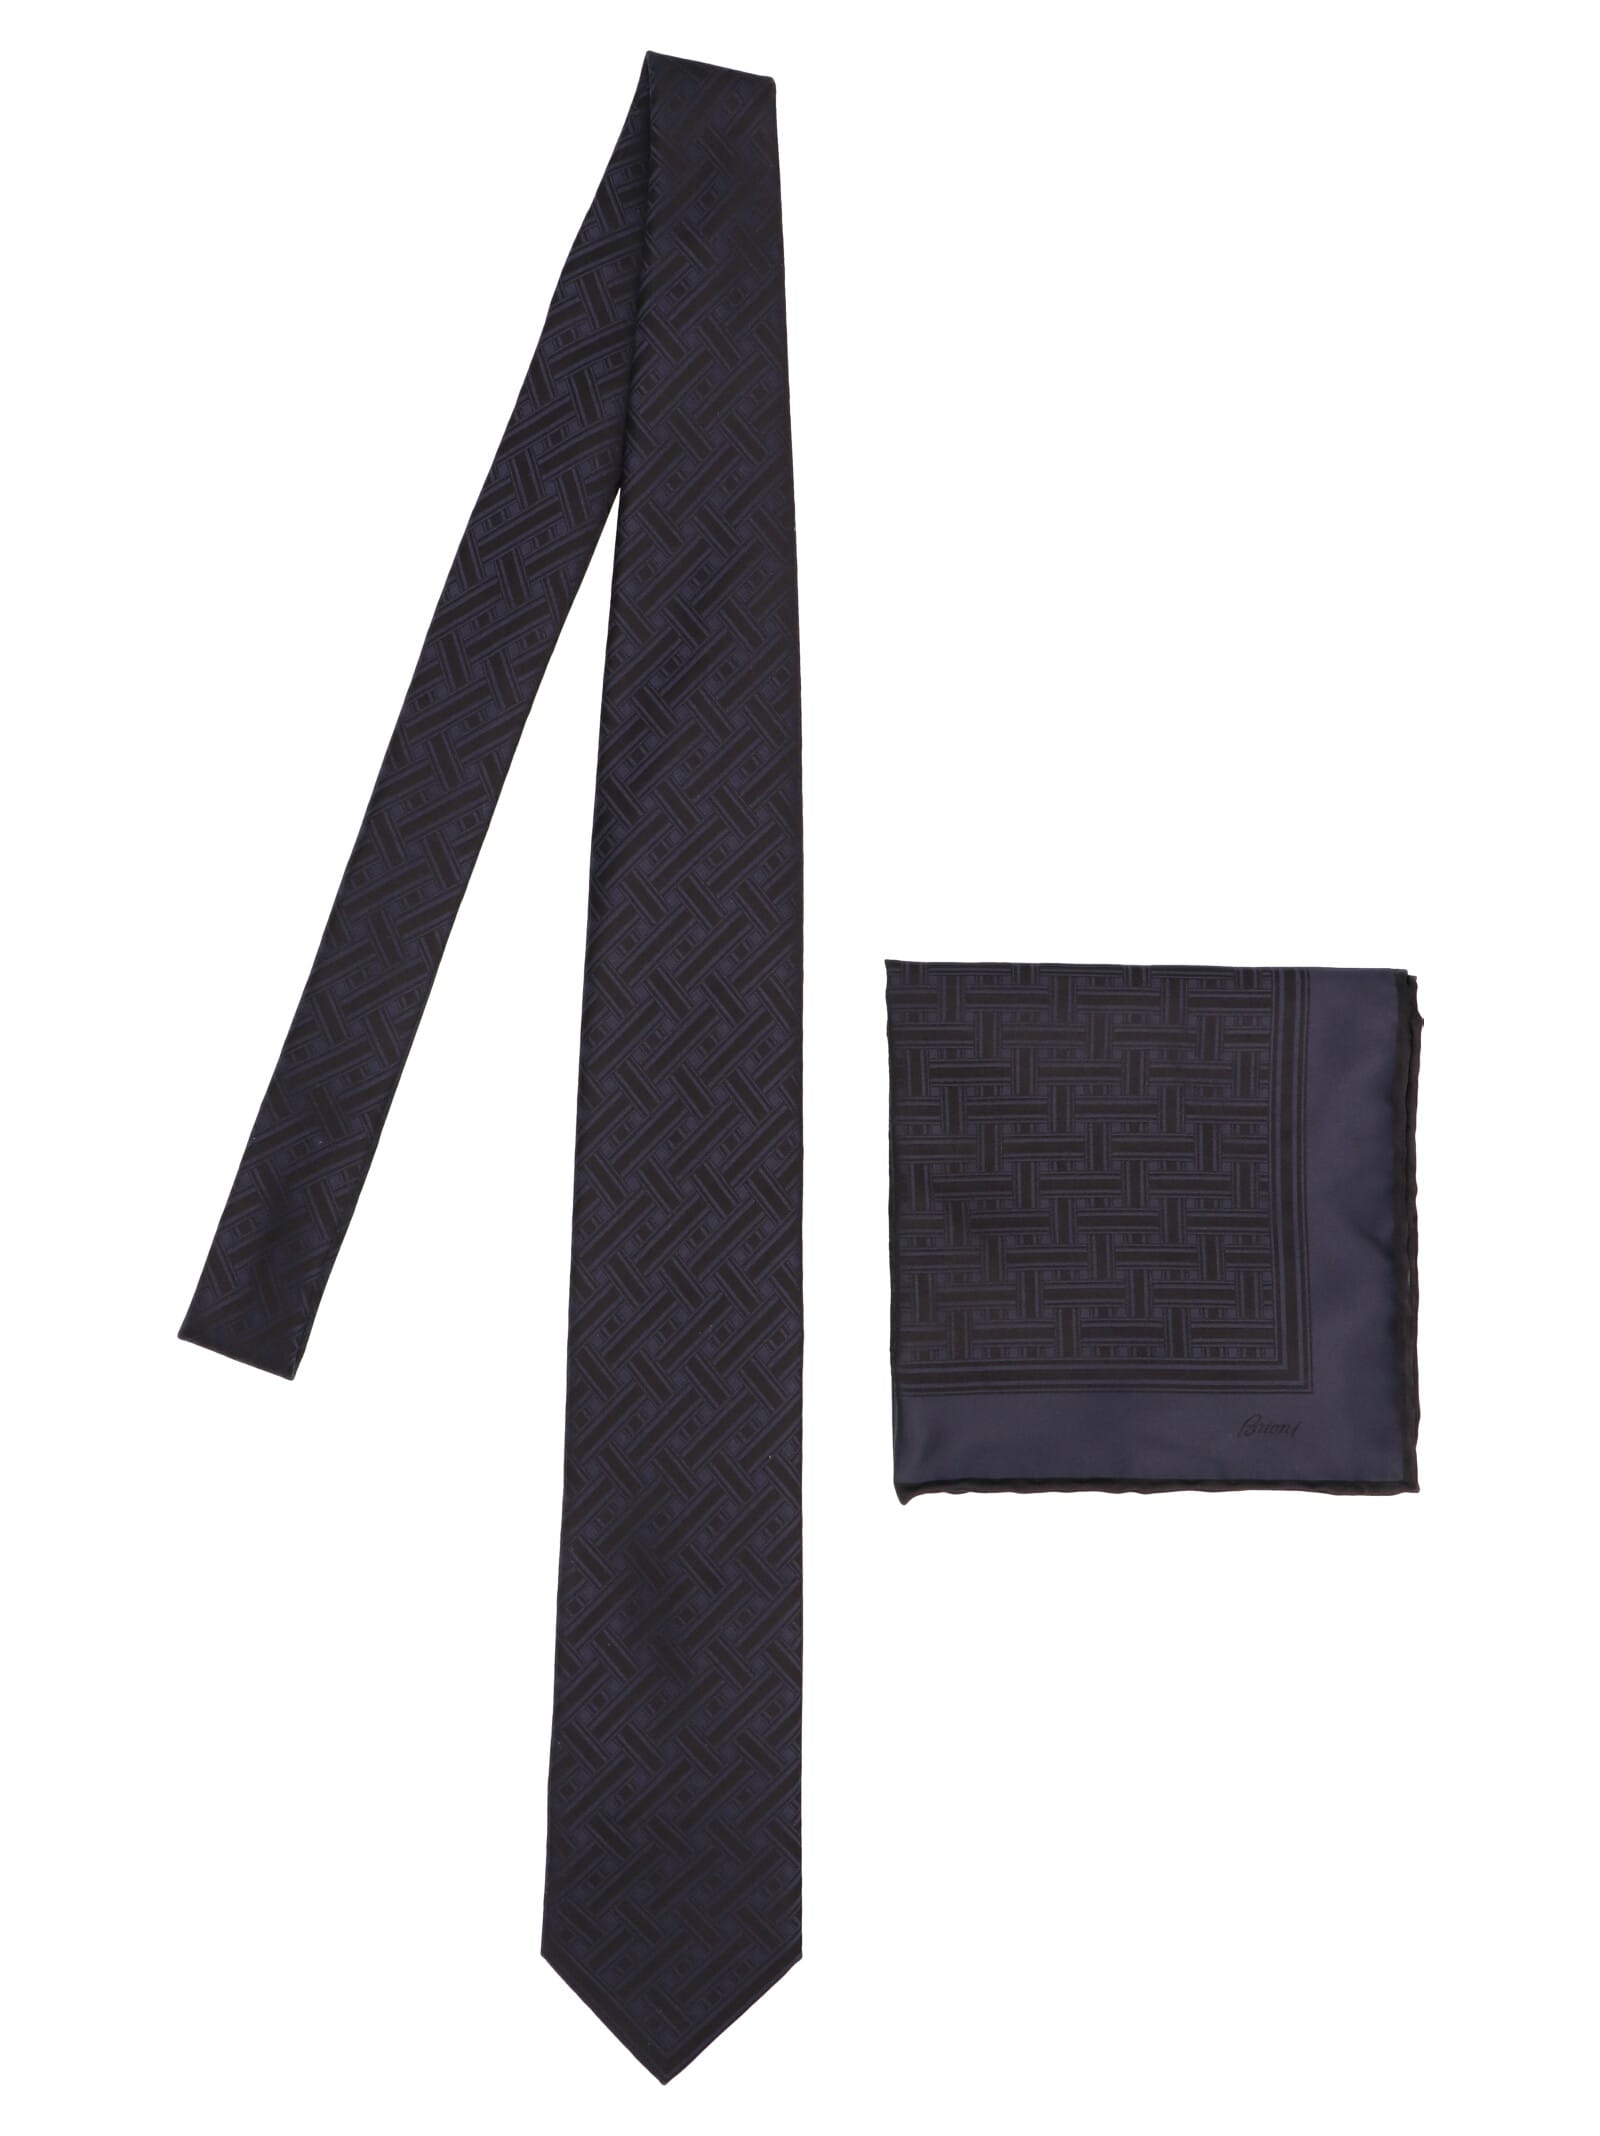 Brioni tie and handkerchief set